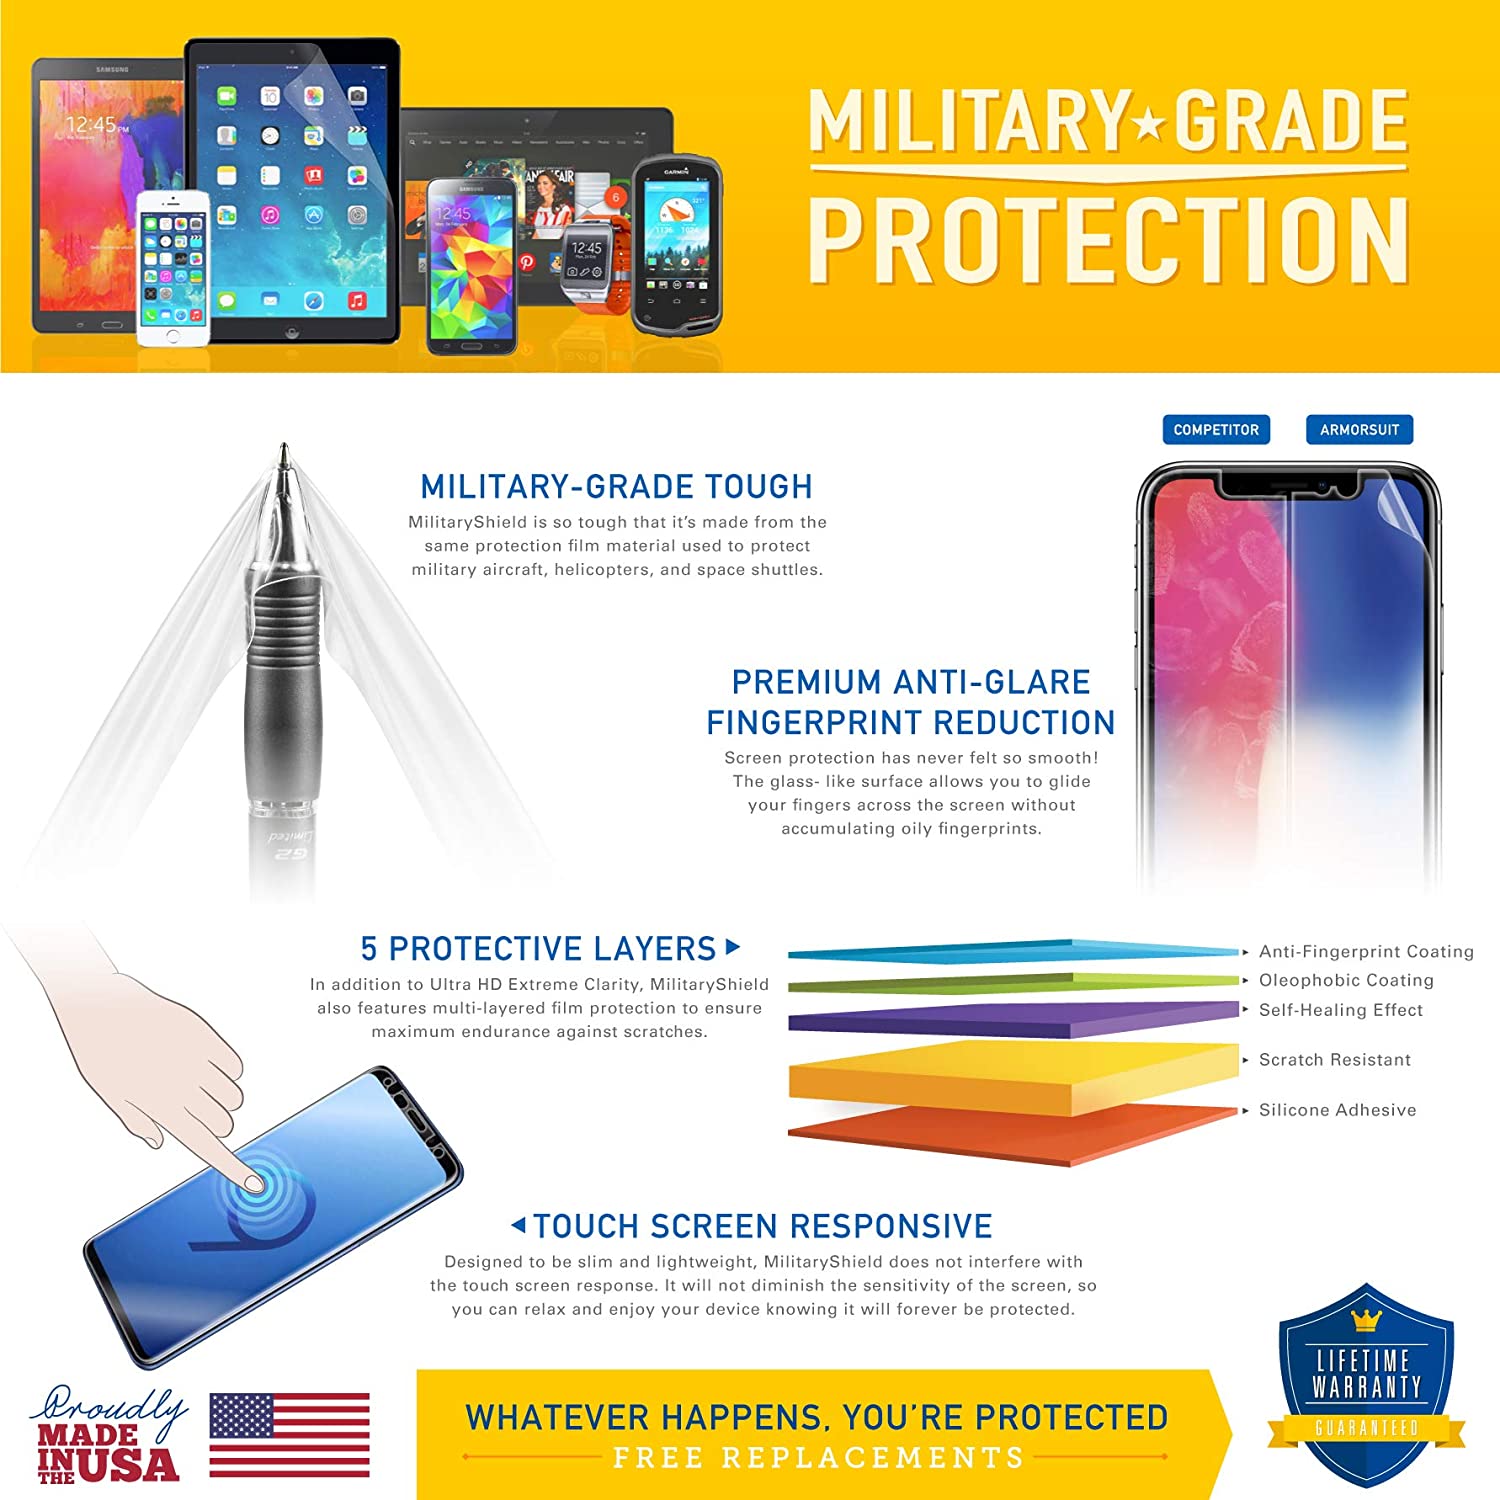 Samsung Galaxy Gear Screen Protector + White Carbon Fiber Skin Protector